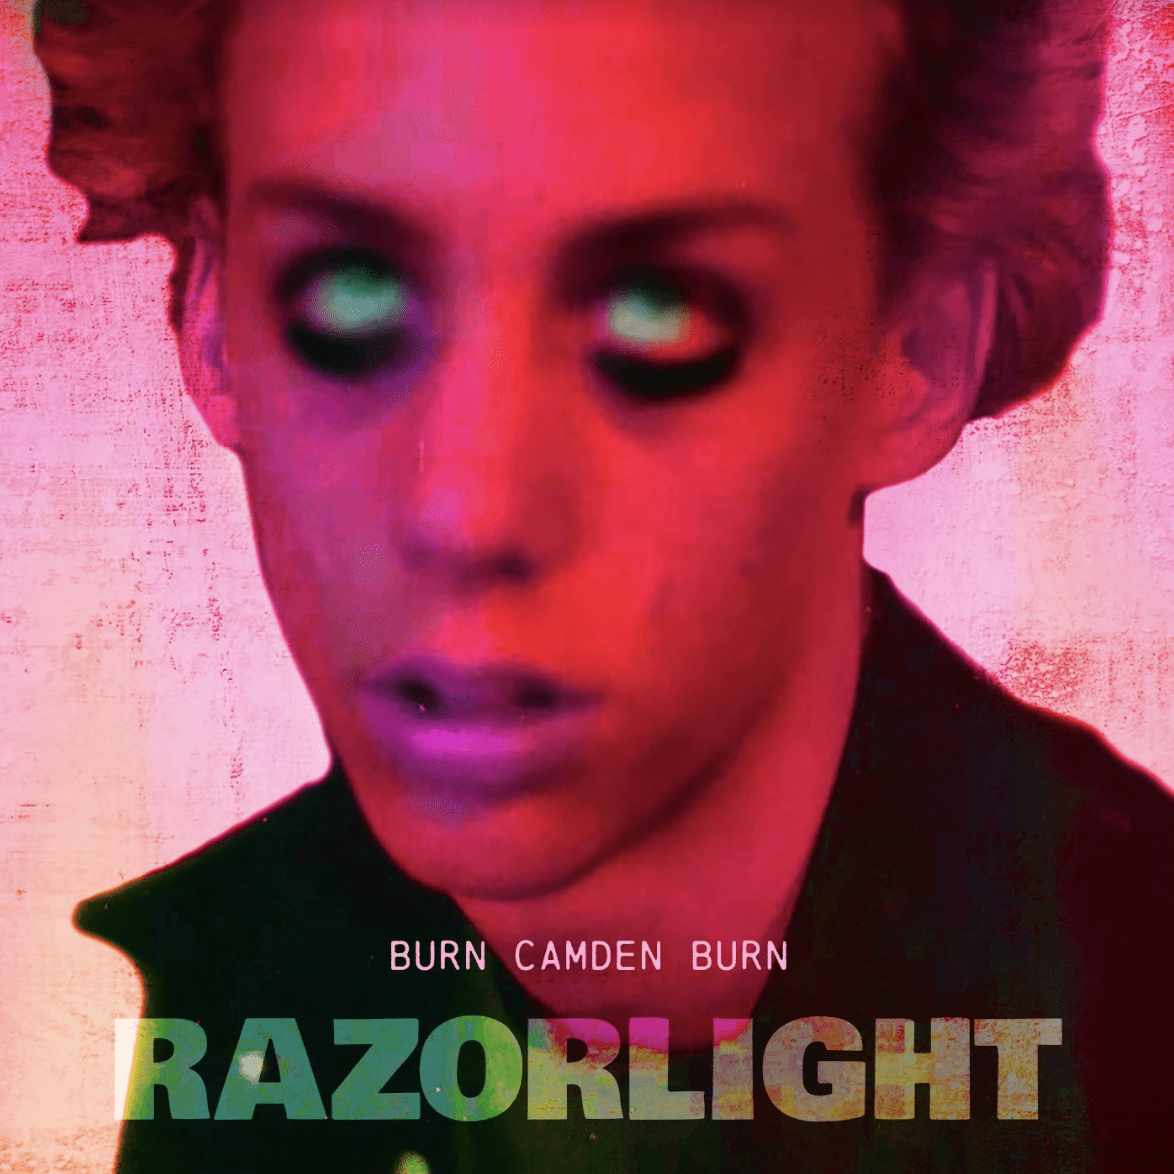 RAZORLIGHT release video for ‘Burn, Camden, Burn’ featuring a 19 Year Old Johnny Borrell 